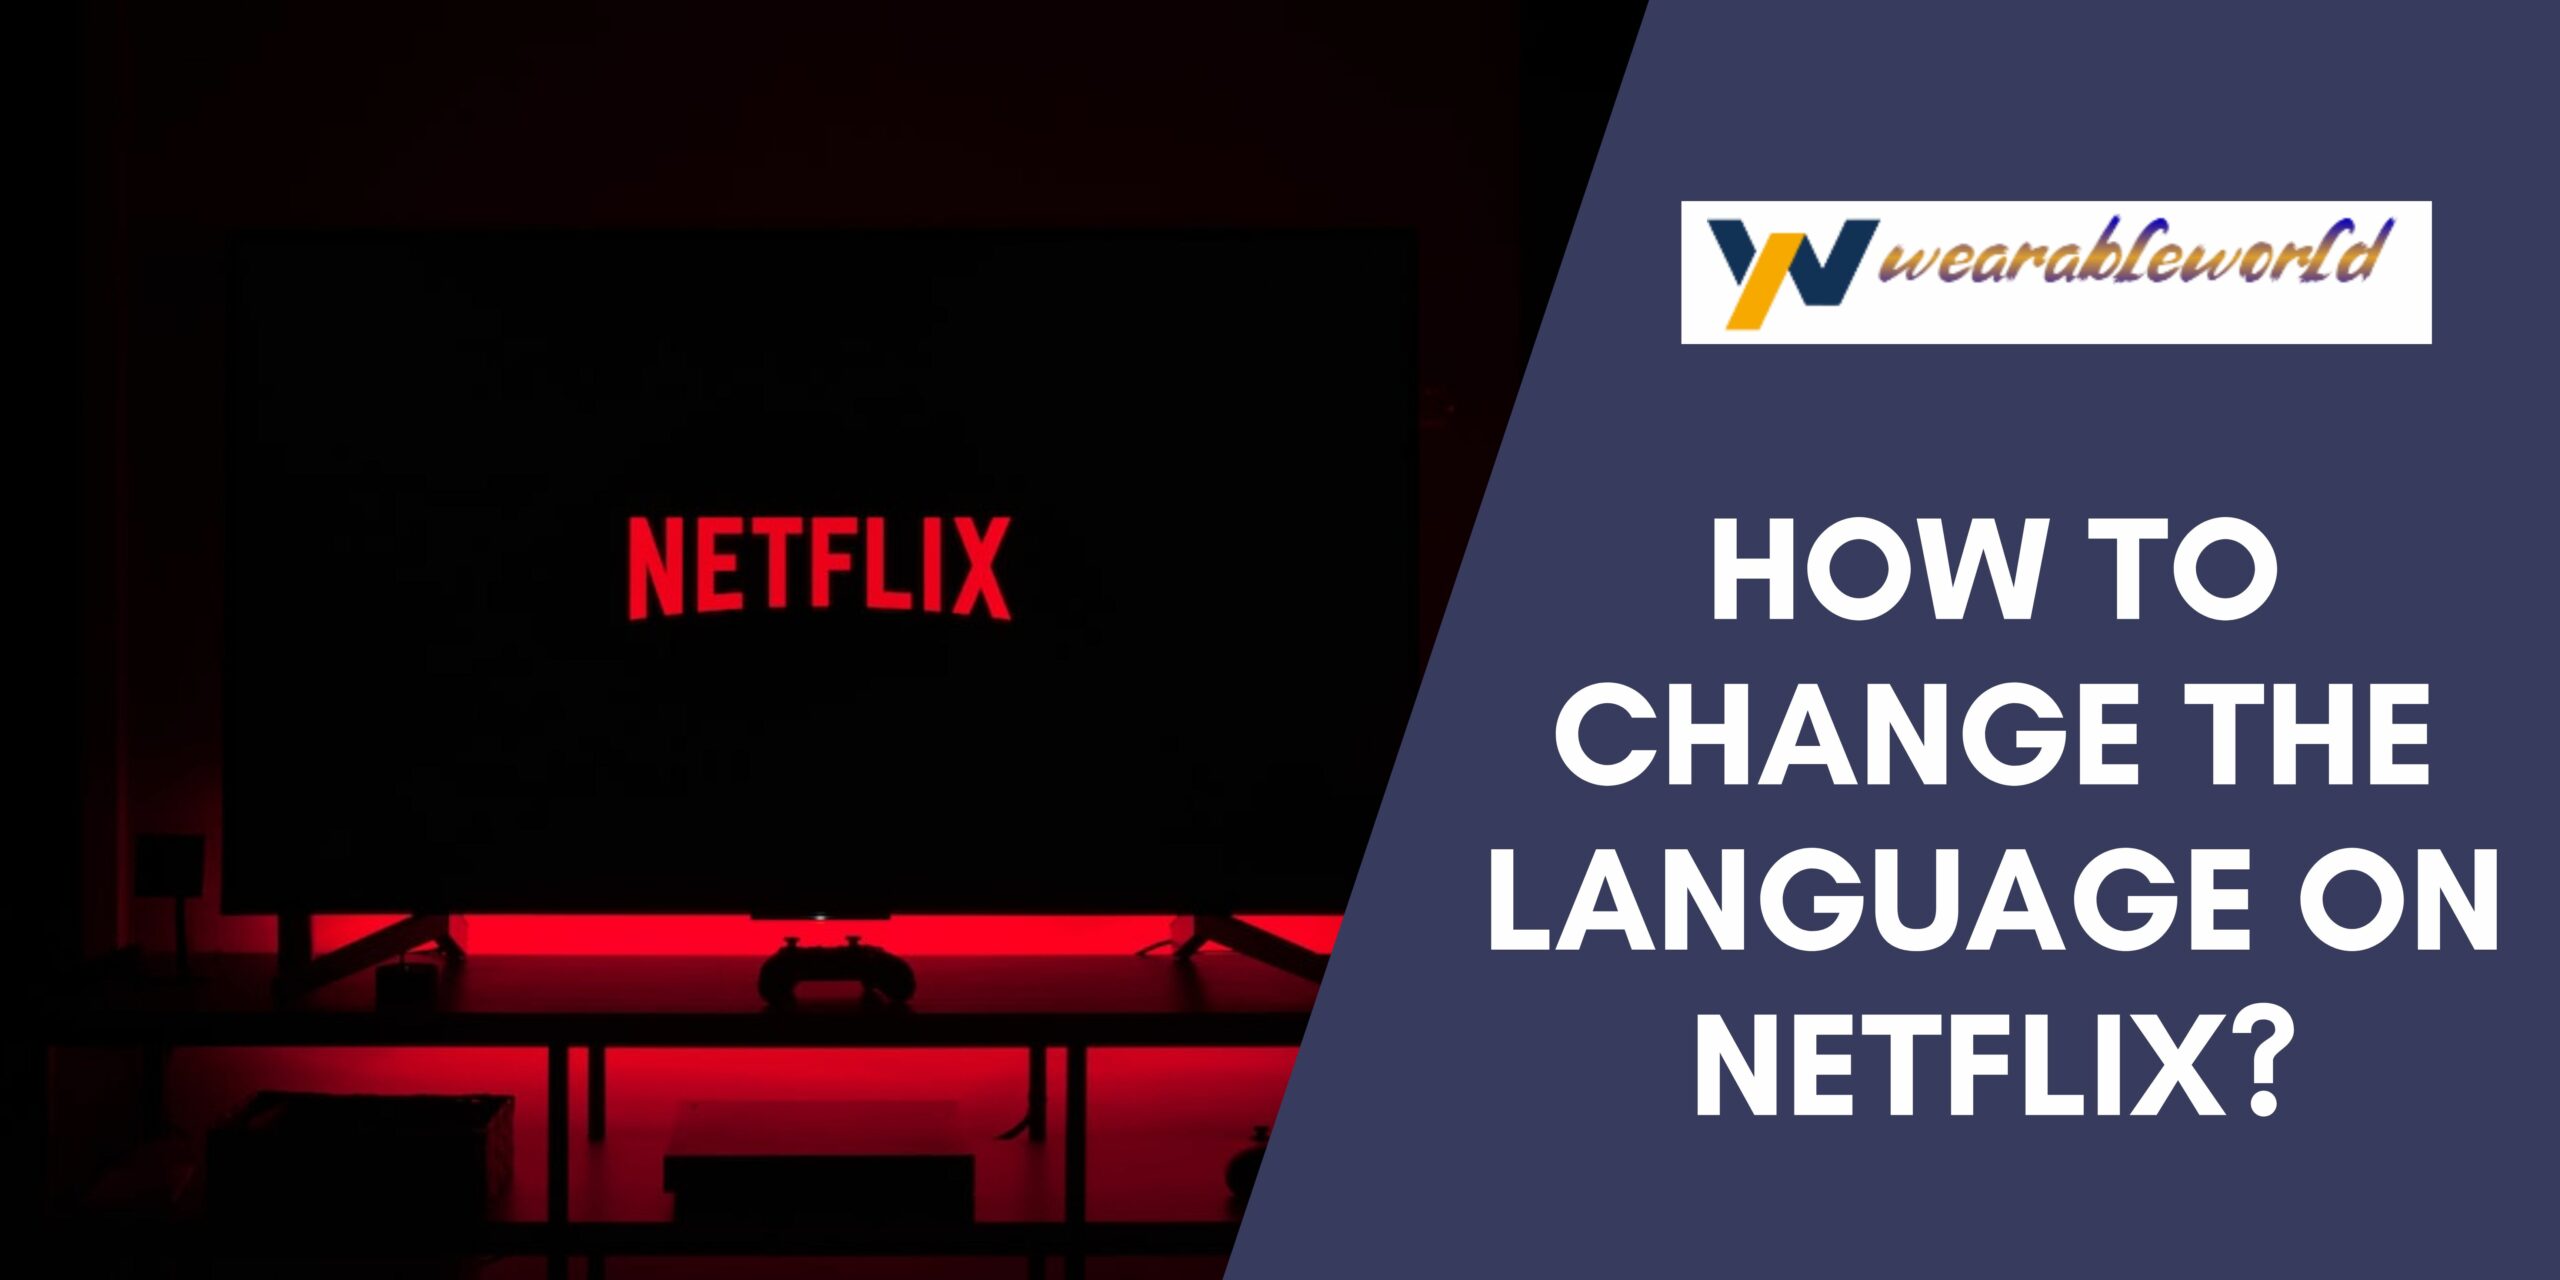 Change the language on Netflix